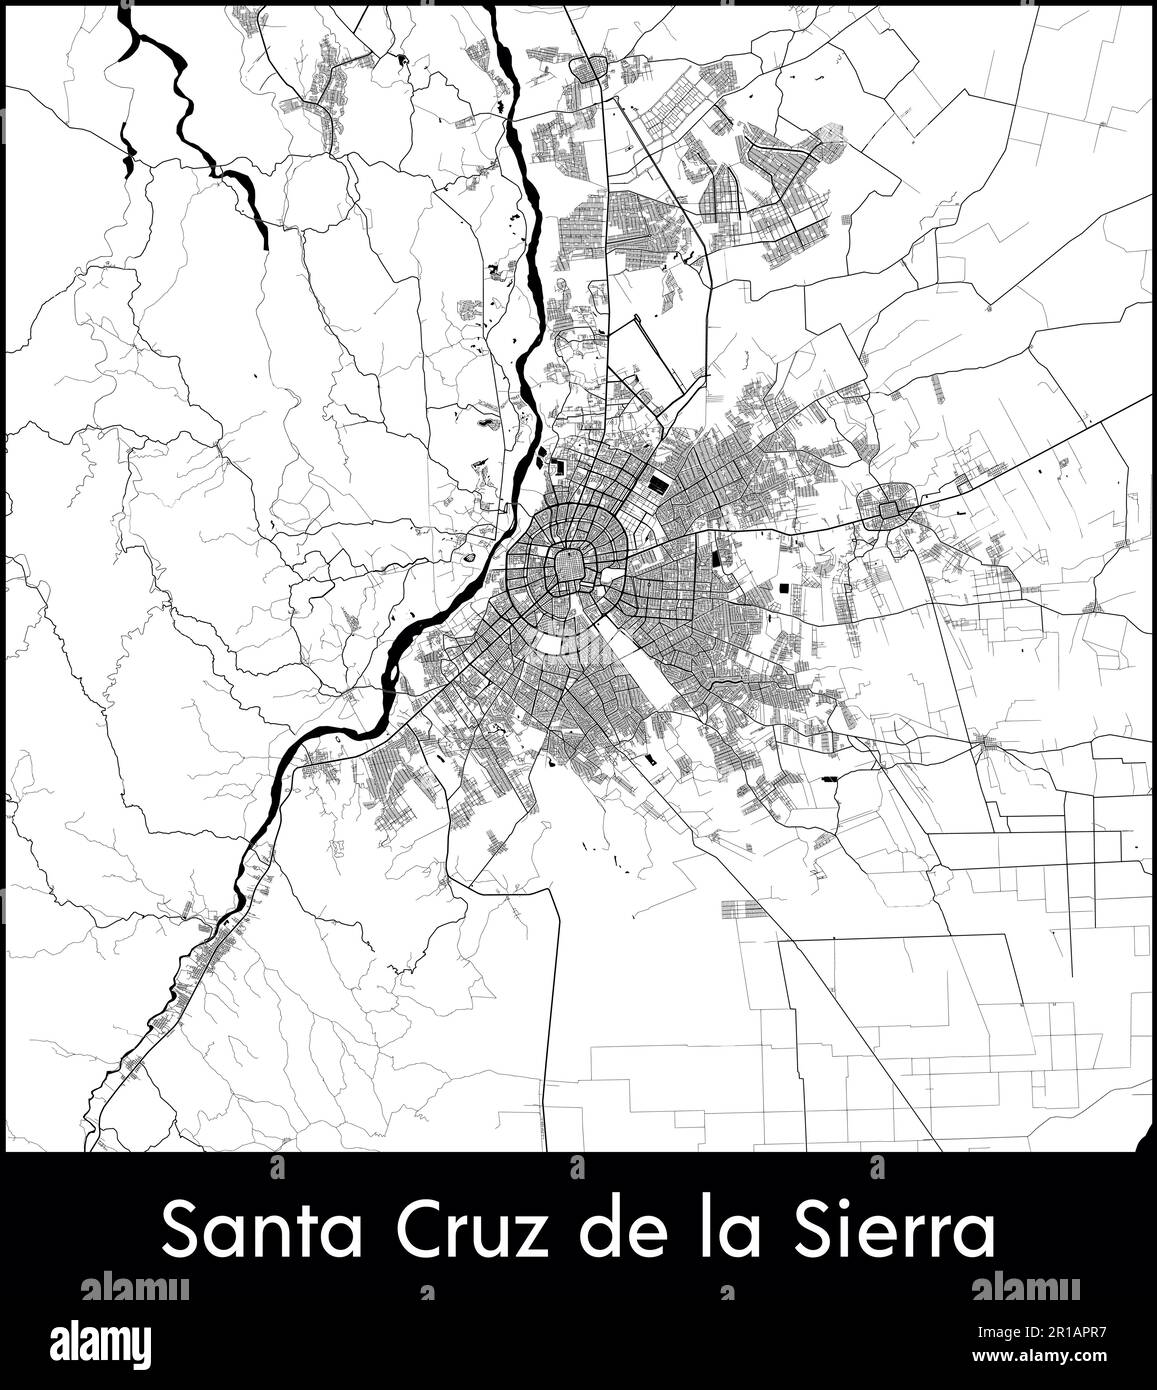 City Map South America Bolivia Santa Cruz de la Sierra vector illustration Stock Vector